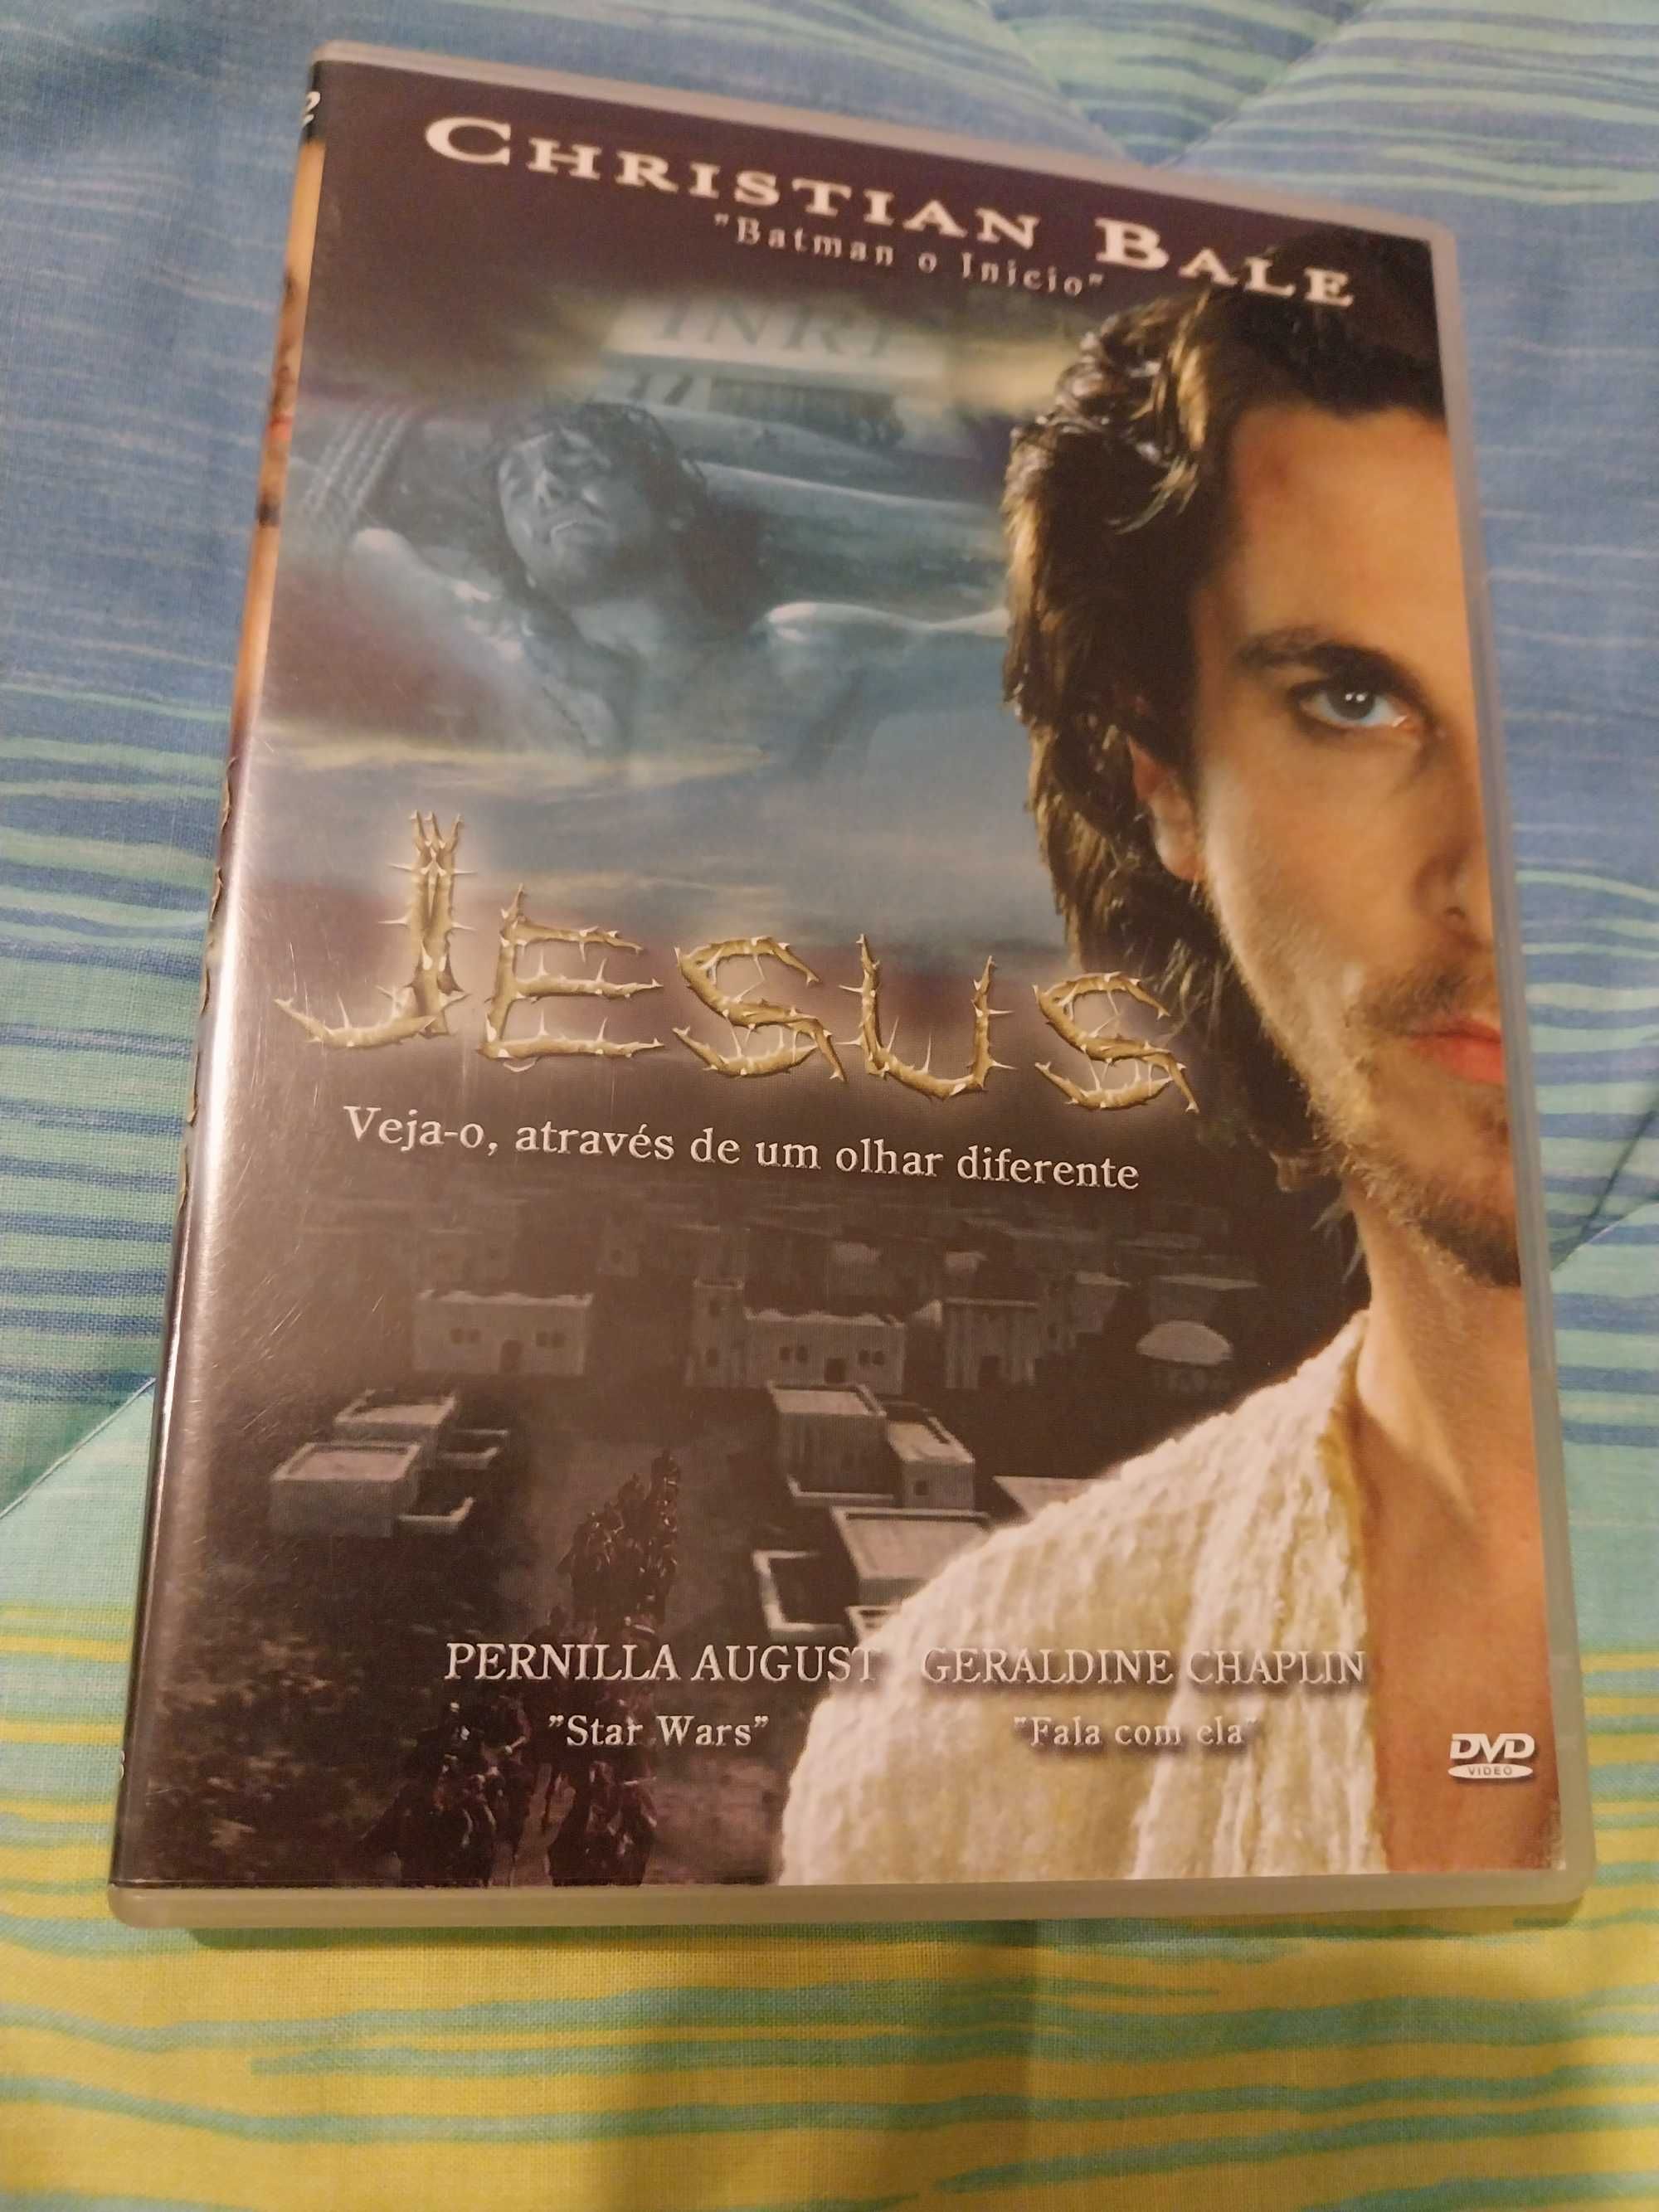 DVD “Jesus”. Christian Bale